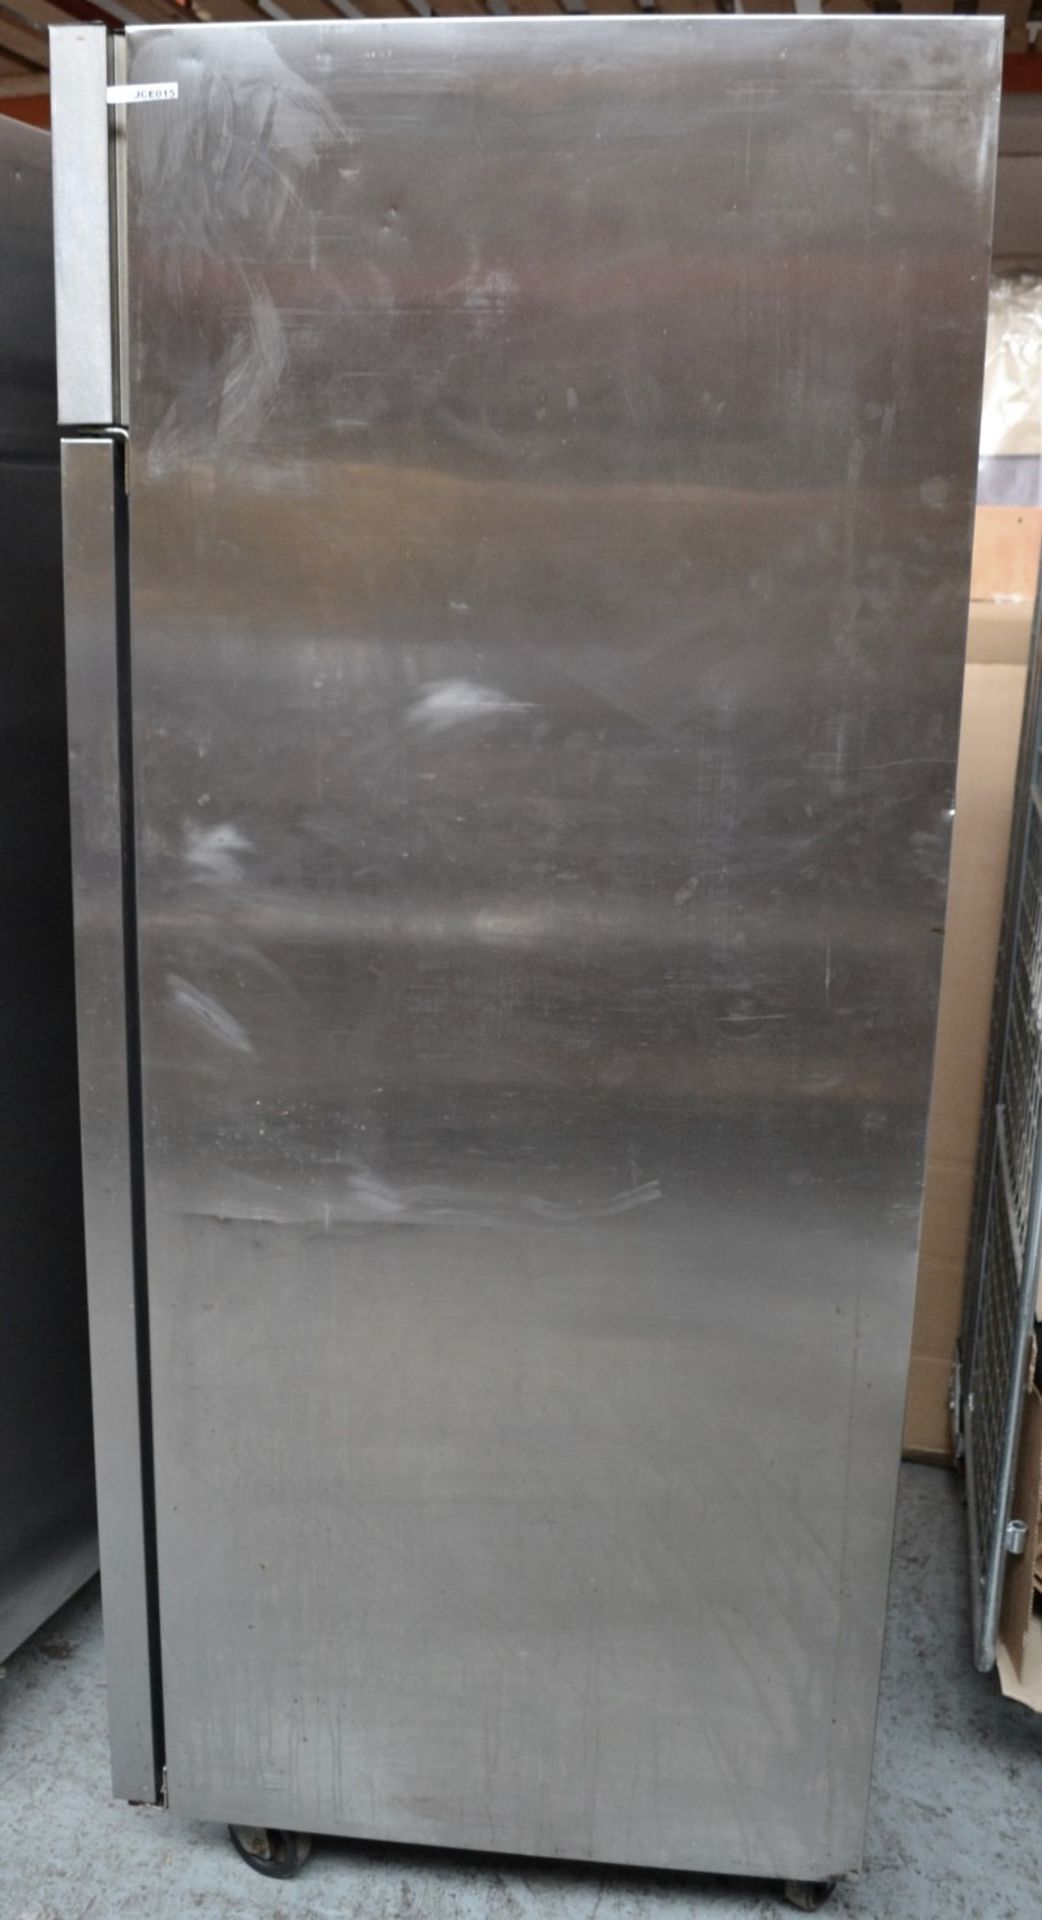 1 x Williams Stainless Steel Single Door Upright Freezer - Model: LJ1SARI - 400 Litre - W74 x 82 x - Image 5 of 5